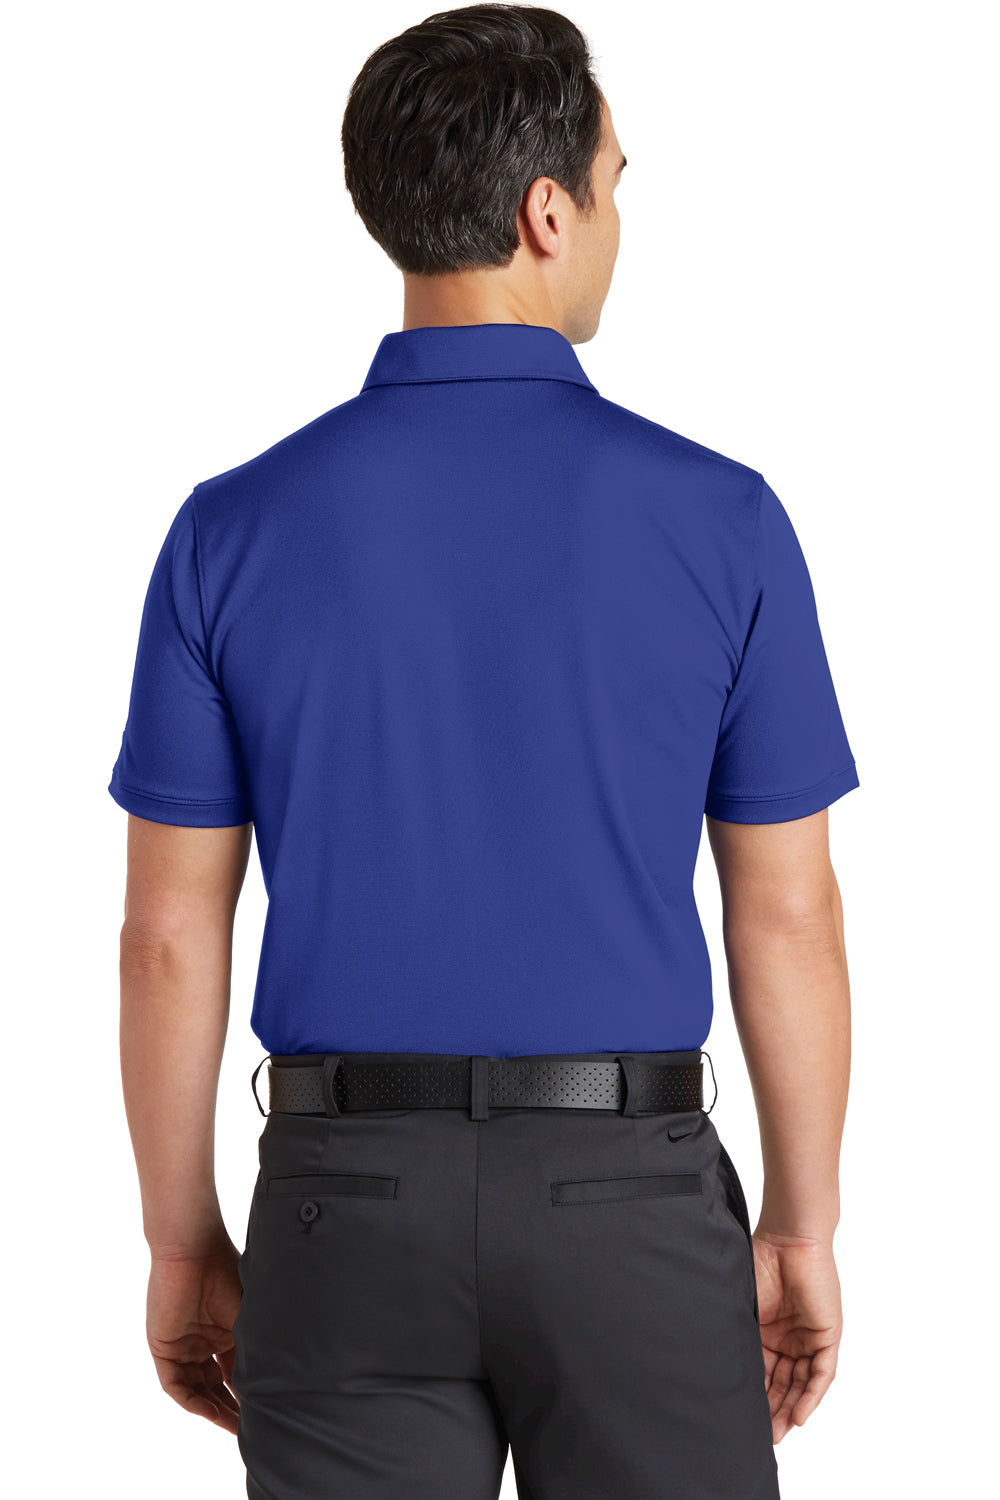 Nike 746099 Mens Icon Dri-Fit Moisture Wicking Short Sleeve Polo Shirt Royal Blue Model Back